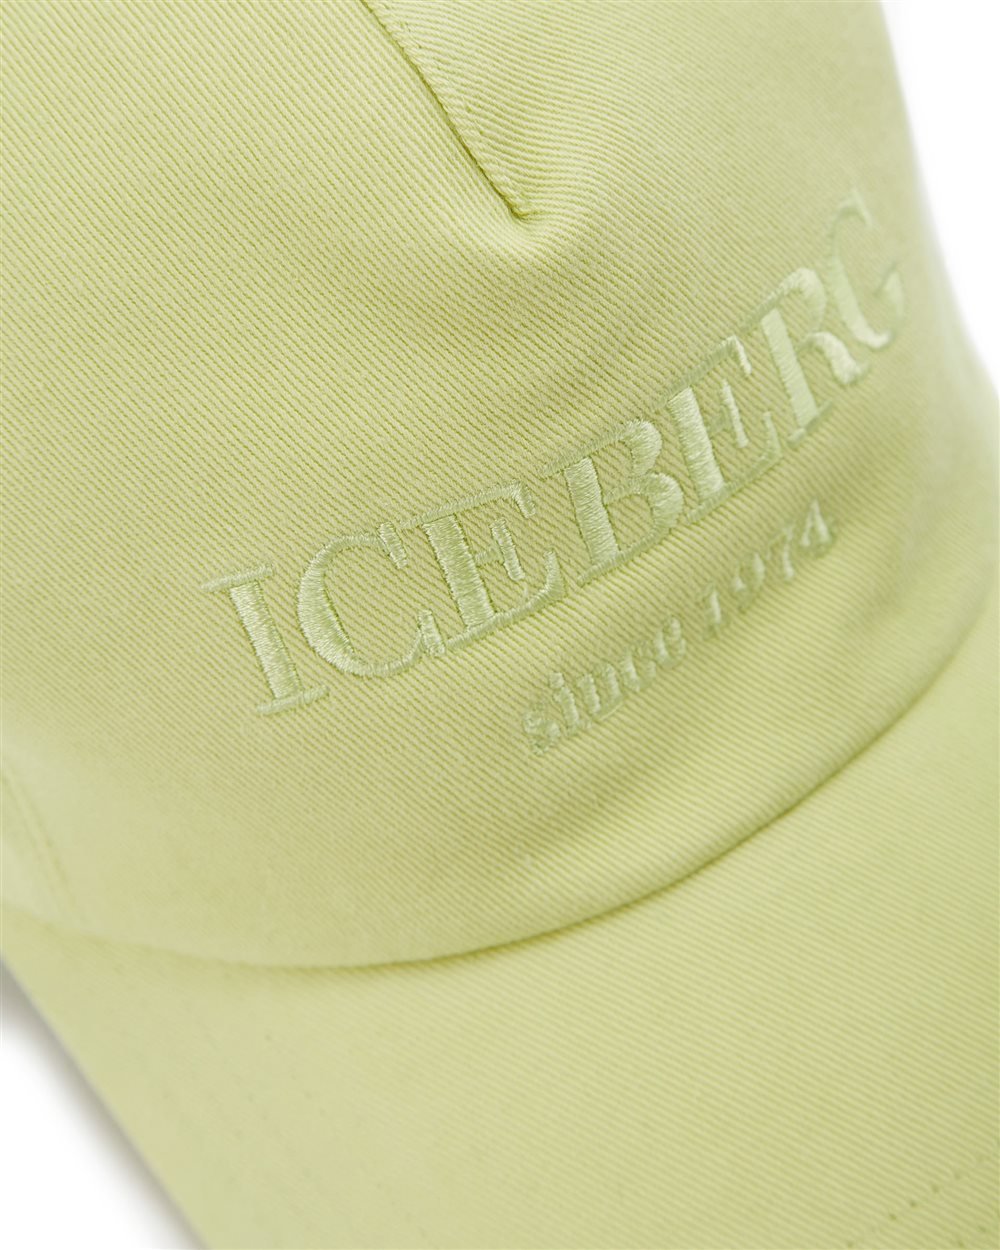 Baseball hat with logo - Iceberg - Official Website